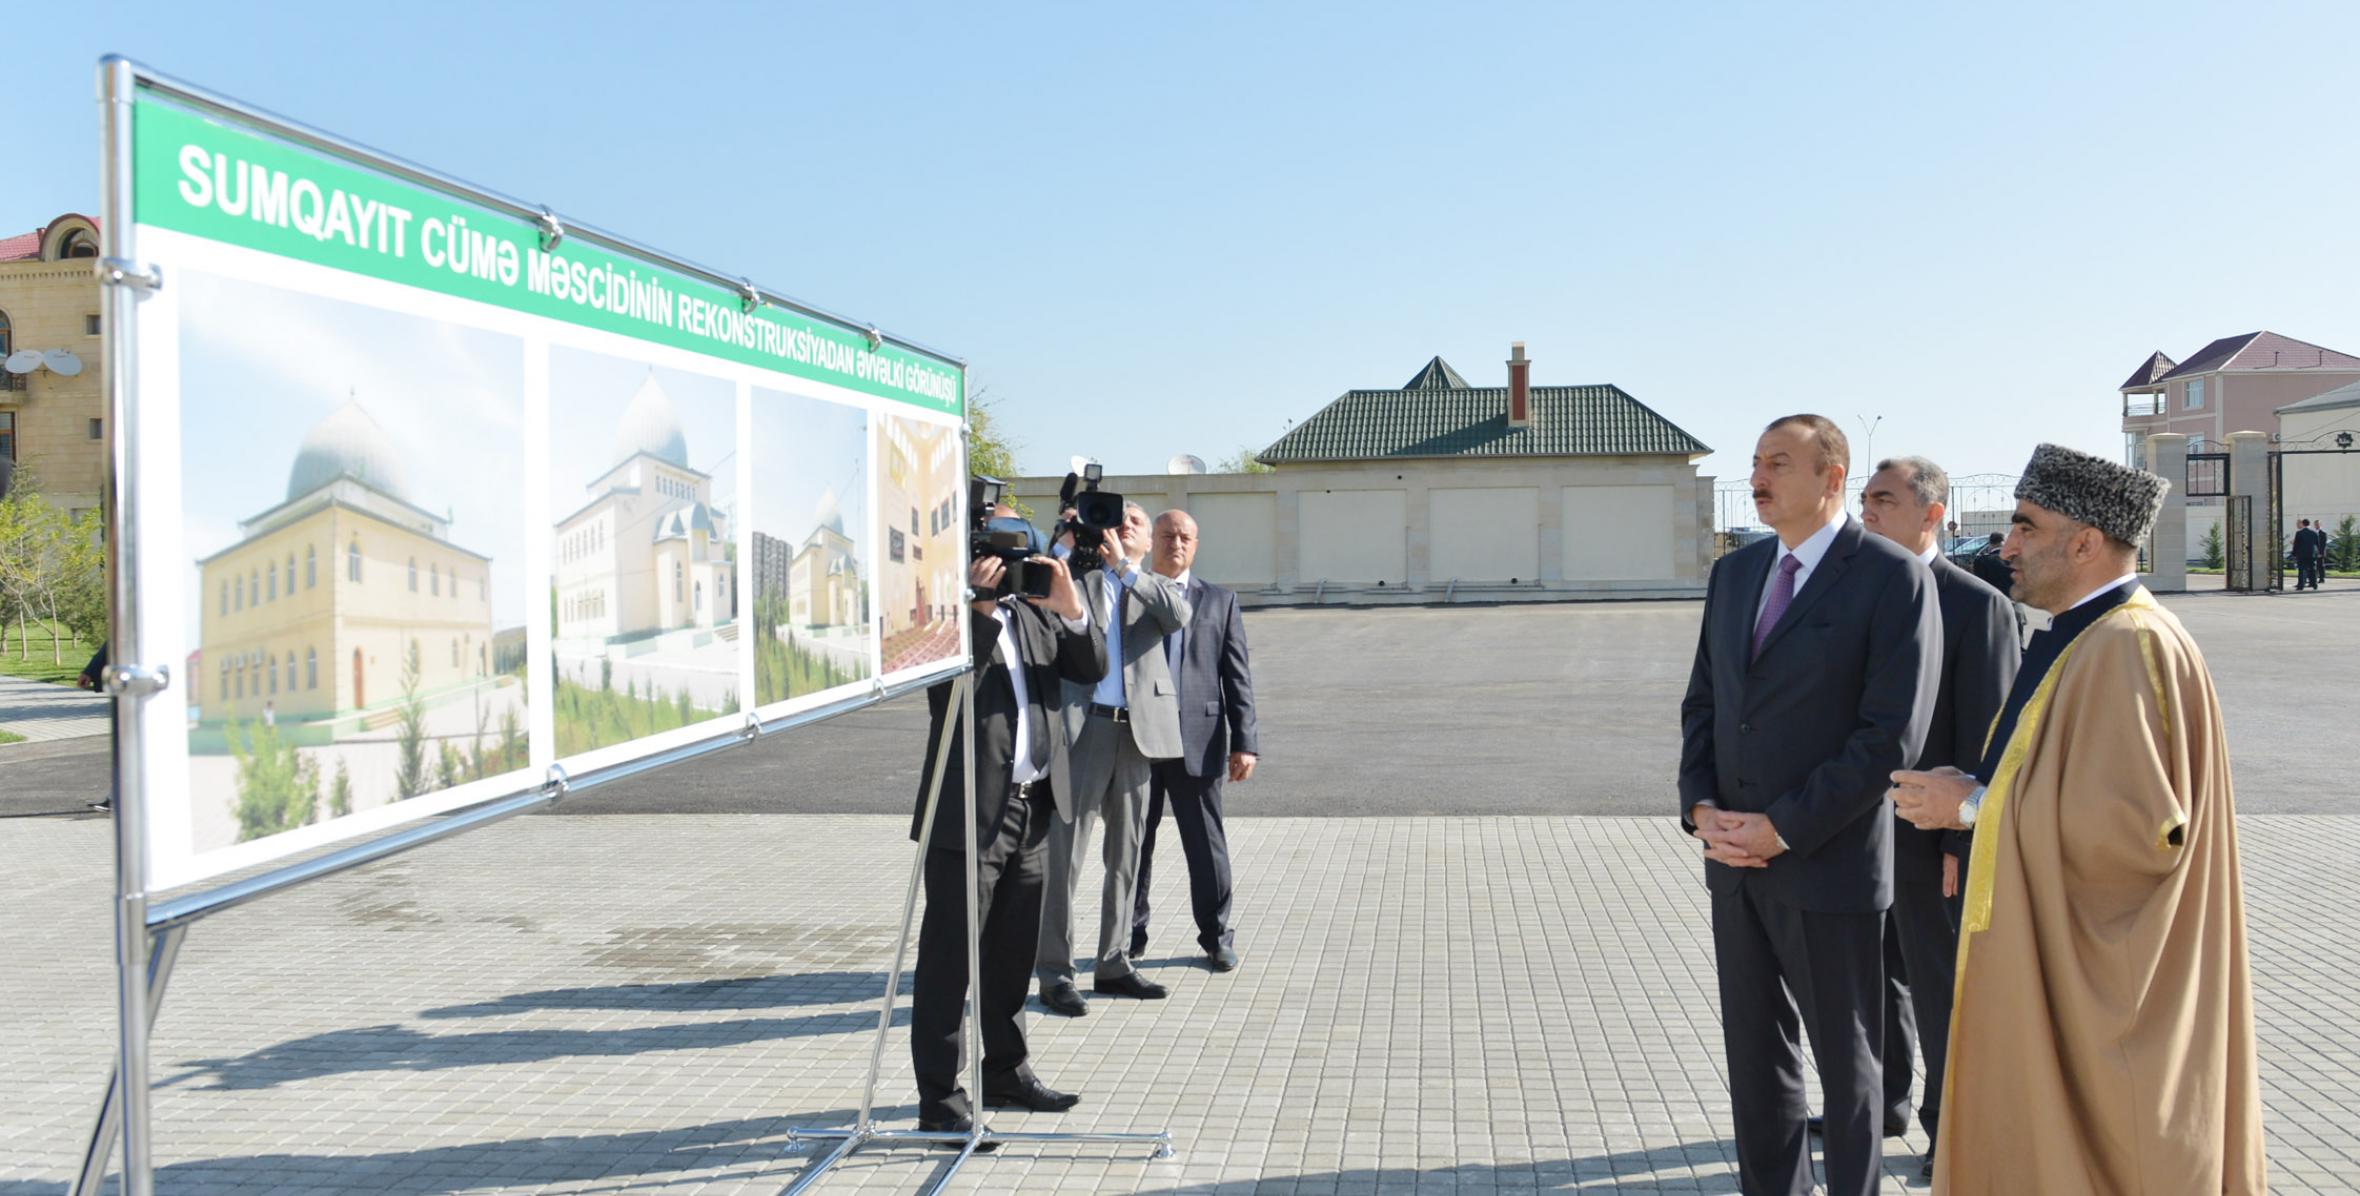 Ilham Aliyev reviewed the Sumgayit Juma Mosque after major overhaul